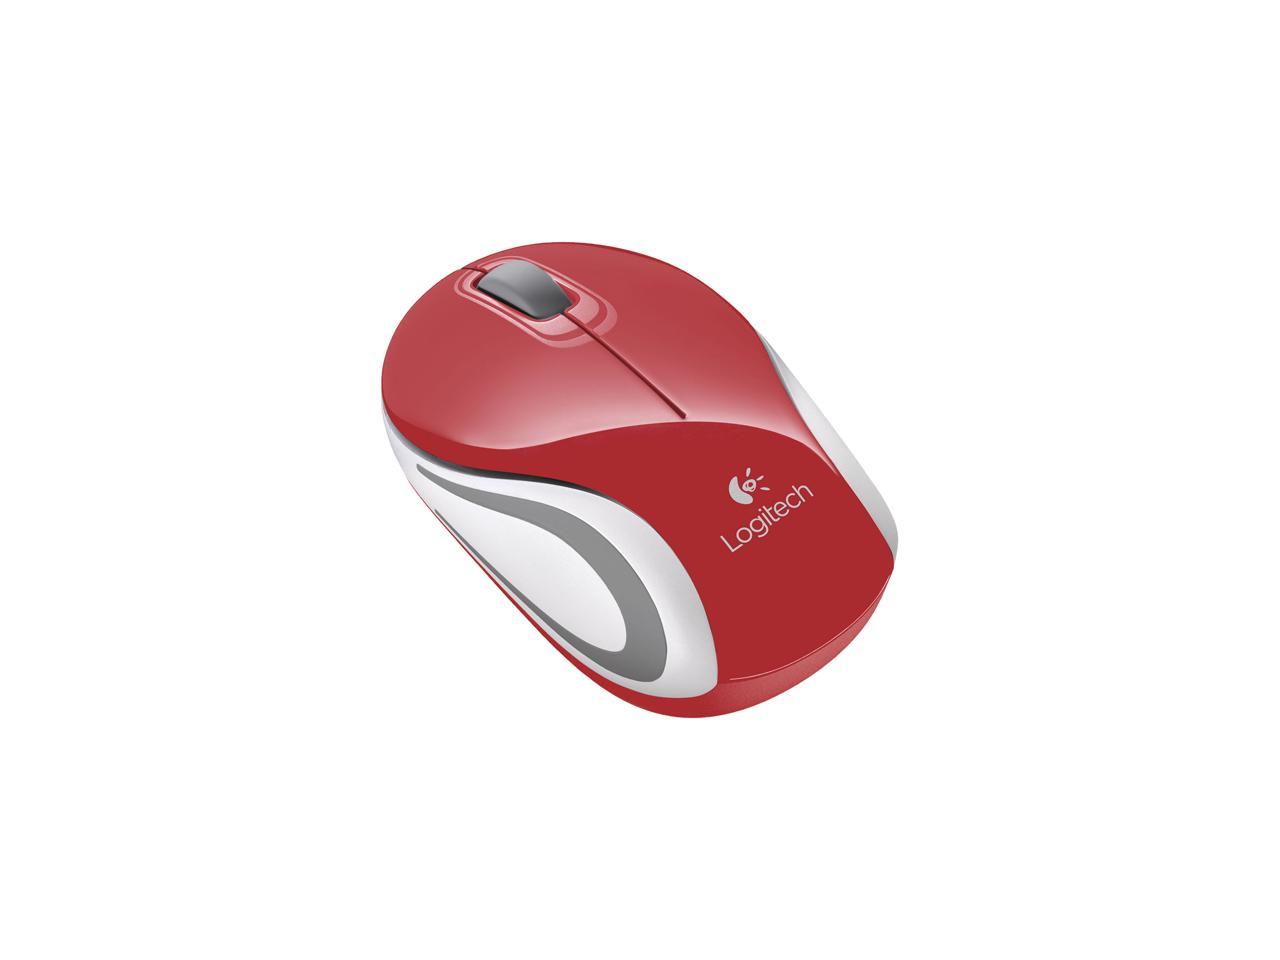 Logitech Wireless Mini Mouse M187 (Red)